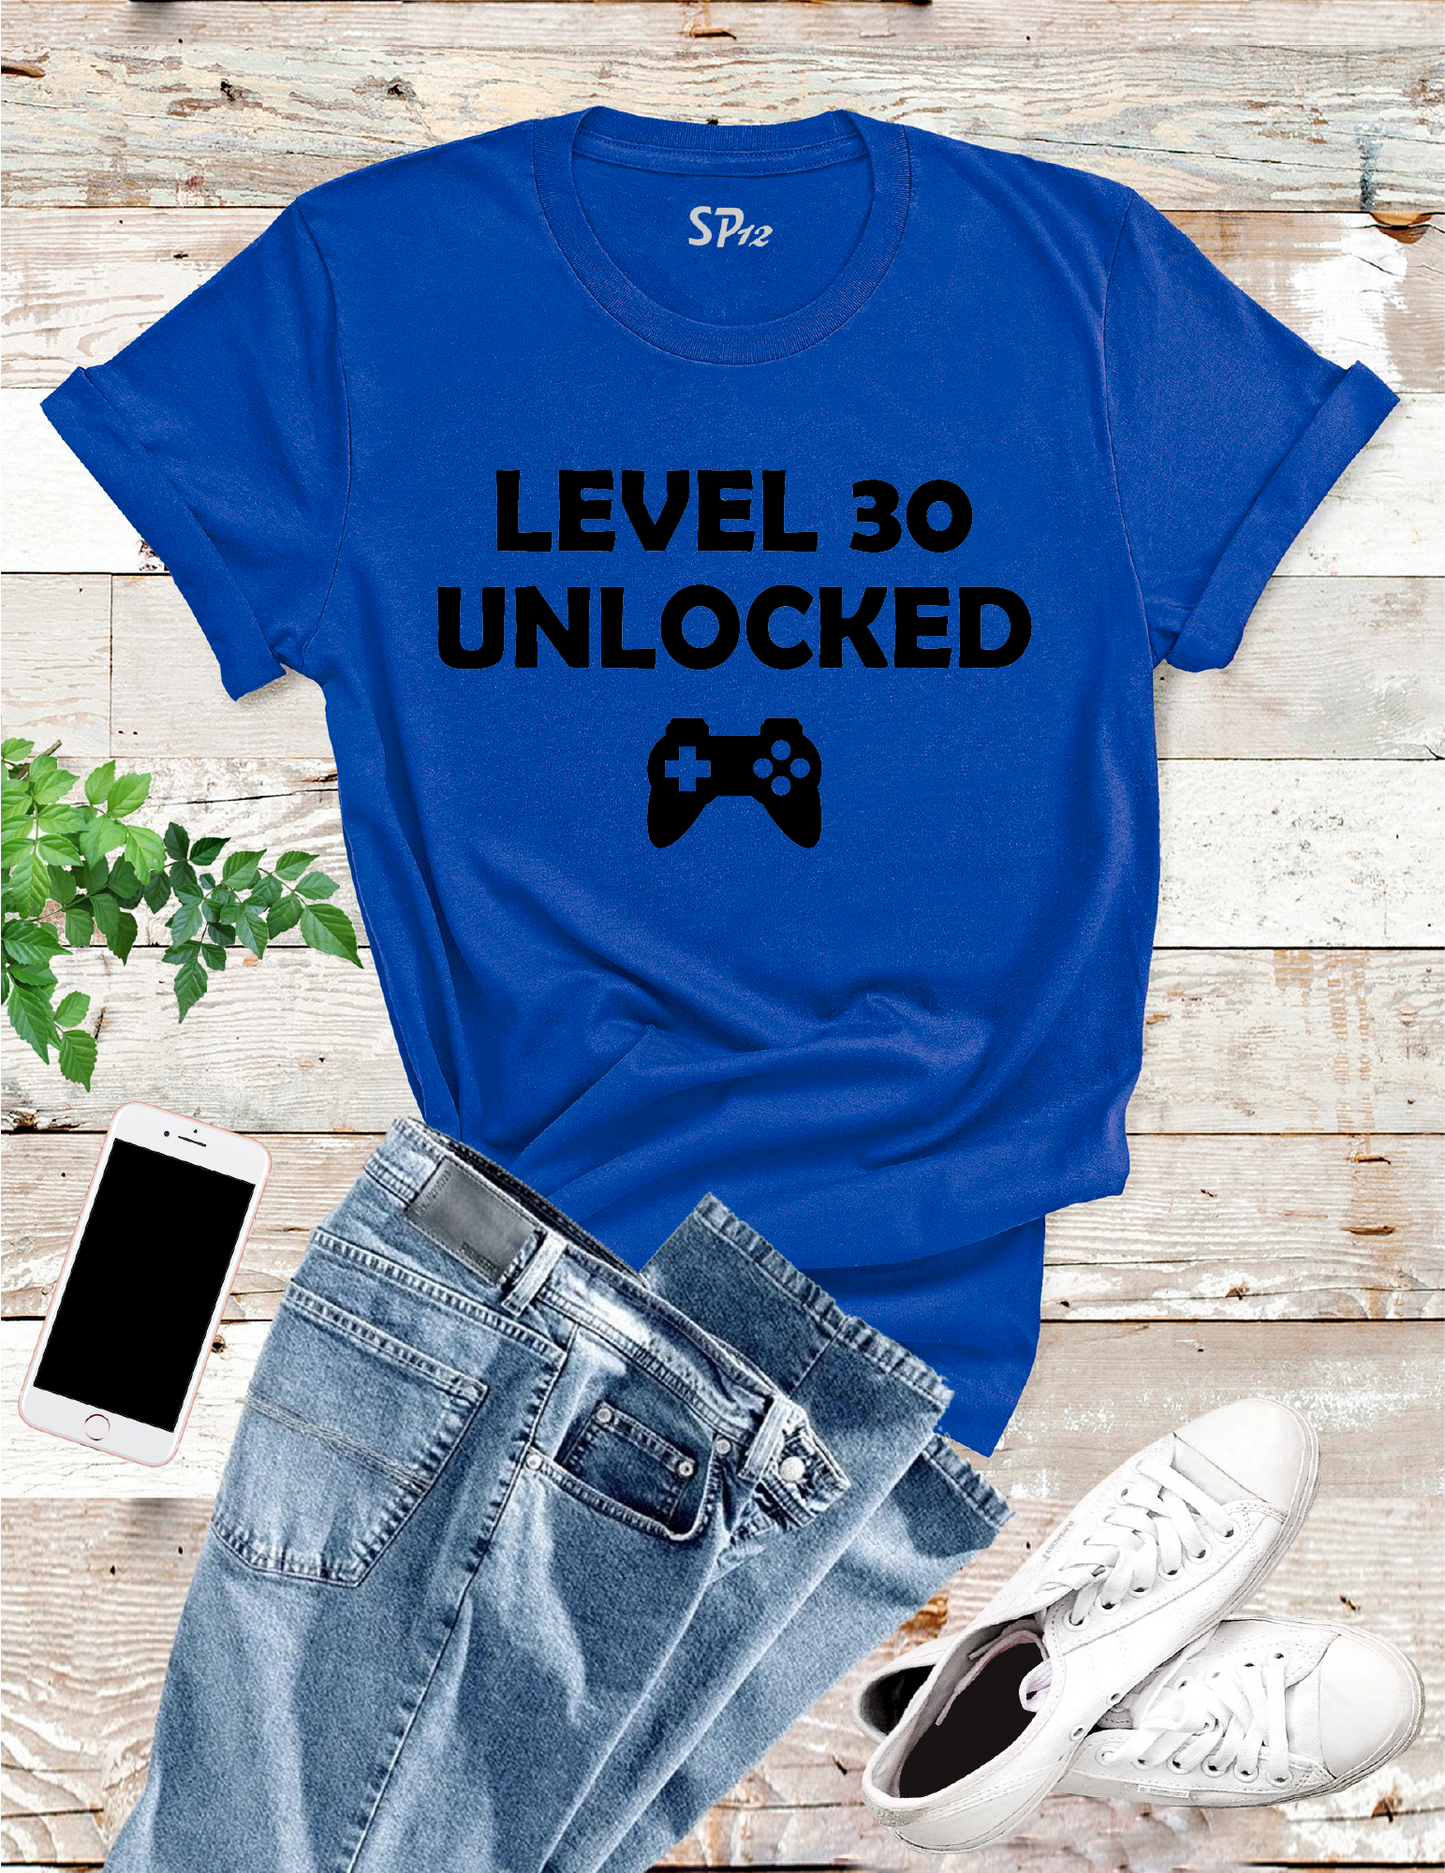 Level 30 Unlock 30th Birthday Tshirt Green